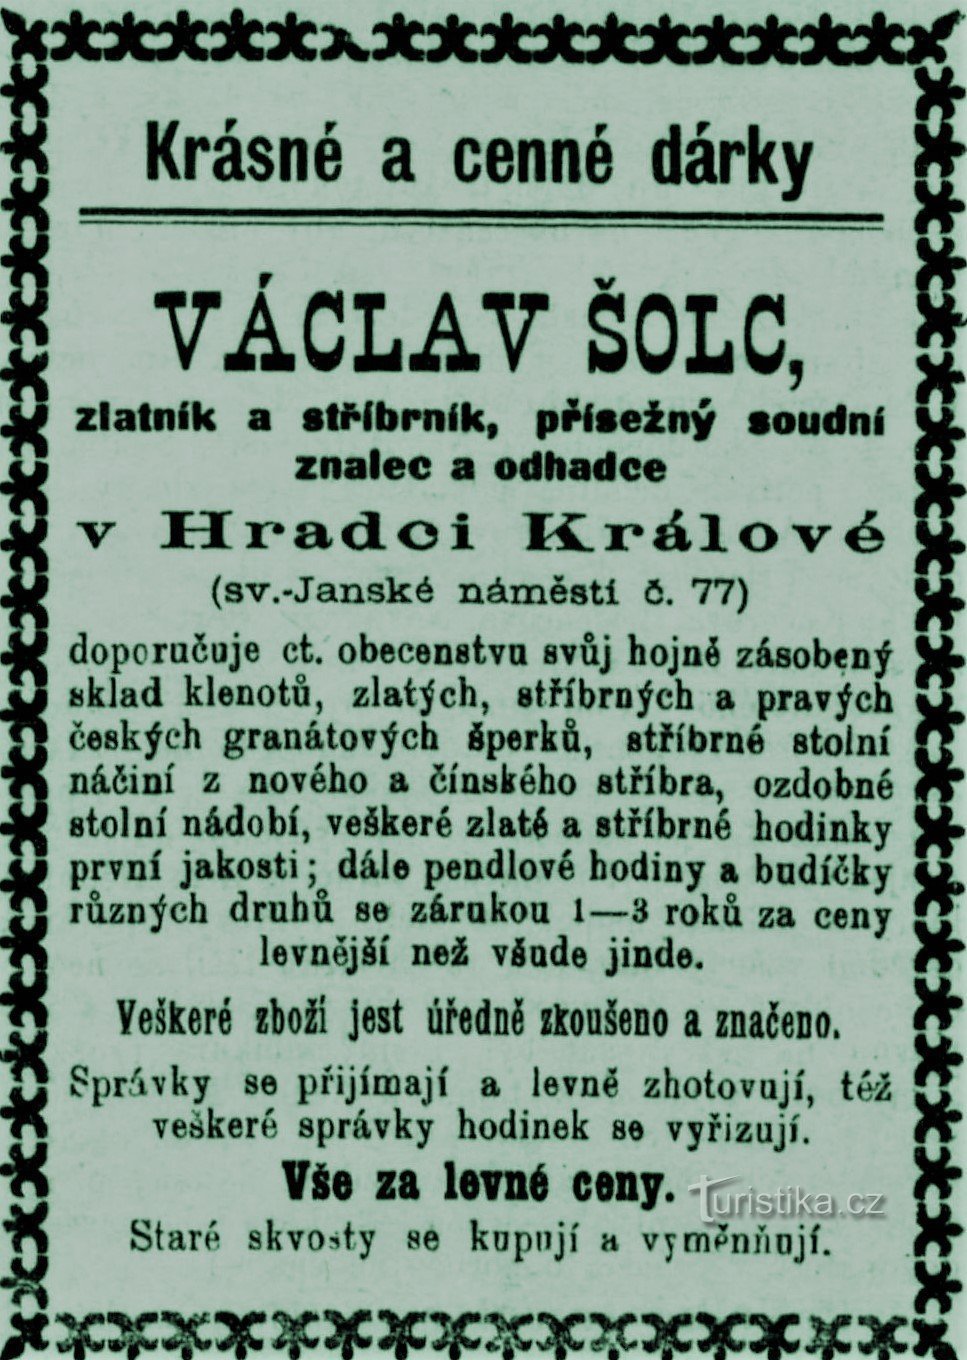 Hradec Královésta kotoisin oleva kultaseppä Václav Šolecin nykyaikainen mainos vuodelta 1899